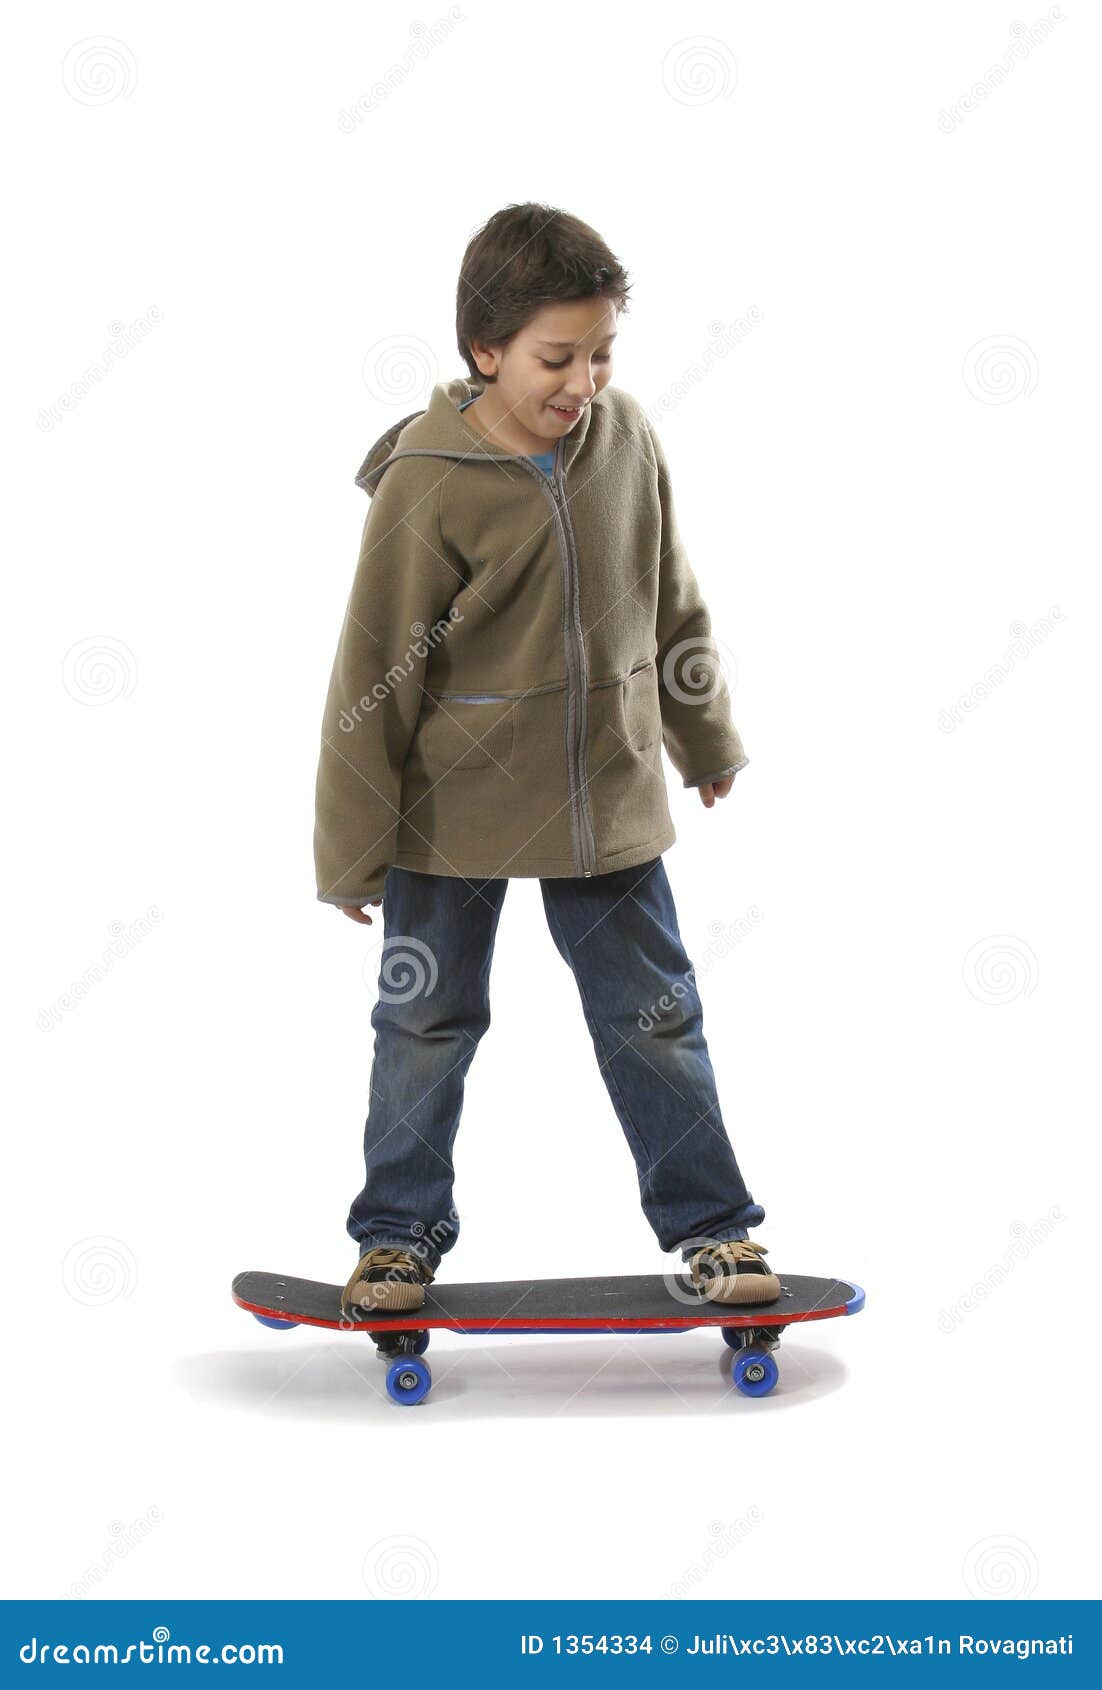 Cool skater boy stock photo. Image of children, child - 1354334